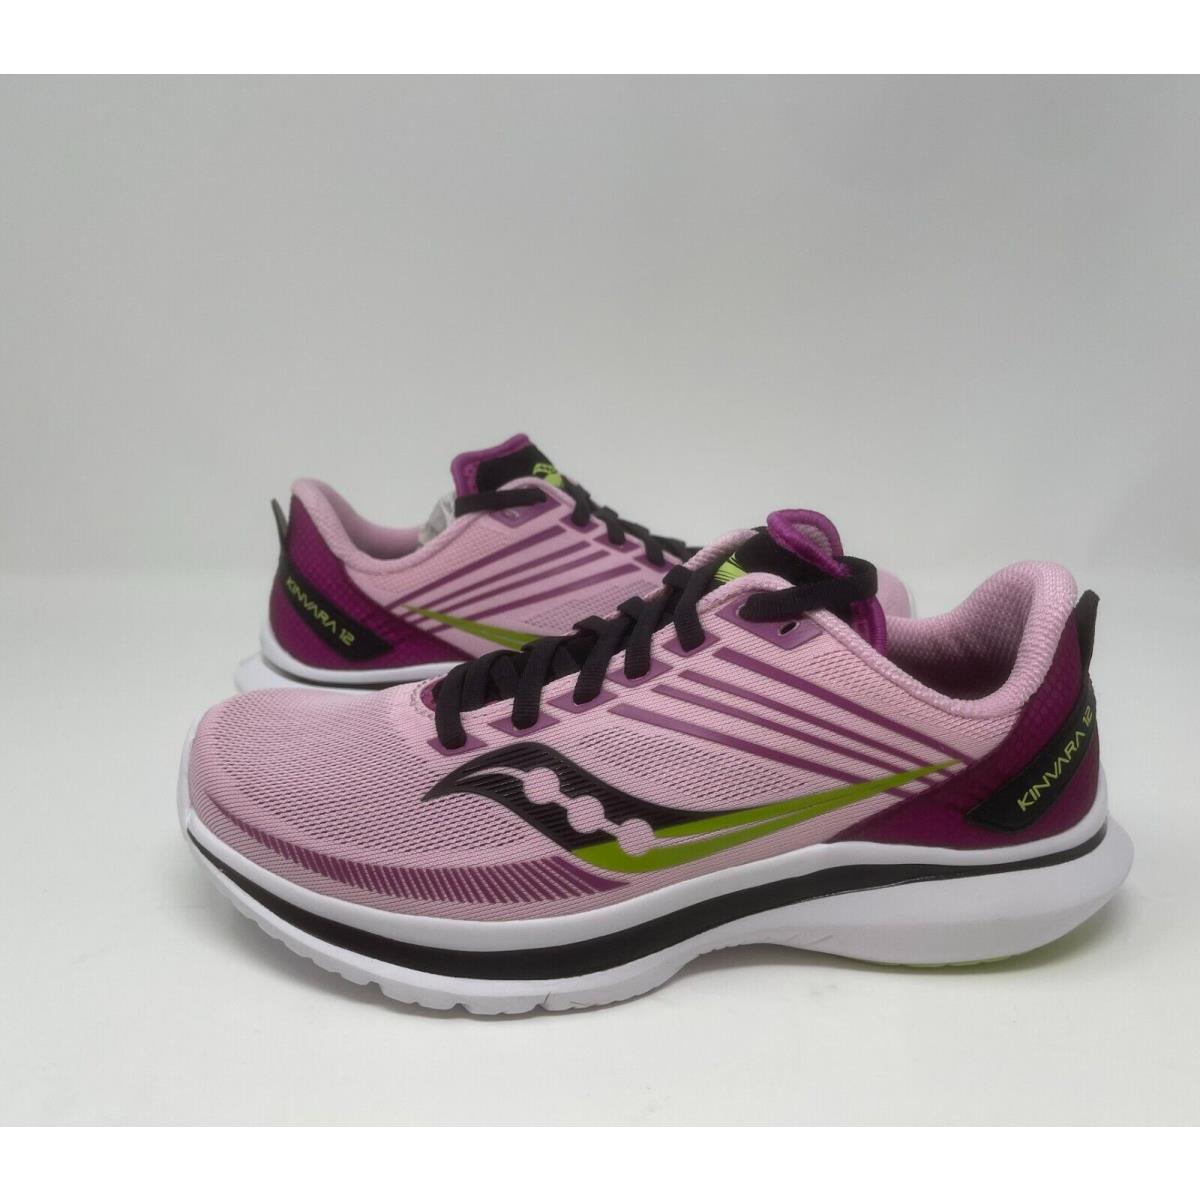 Saucony shoes Kinvara - Pink 2